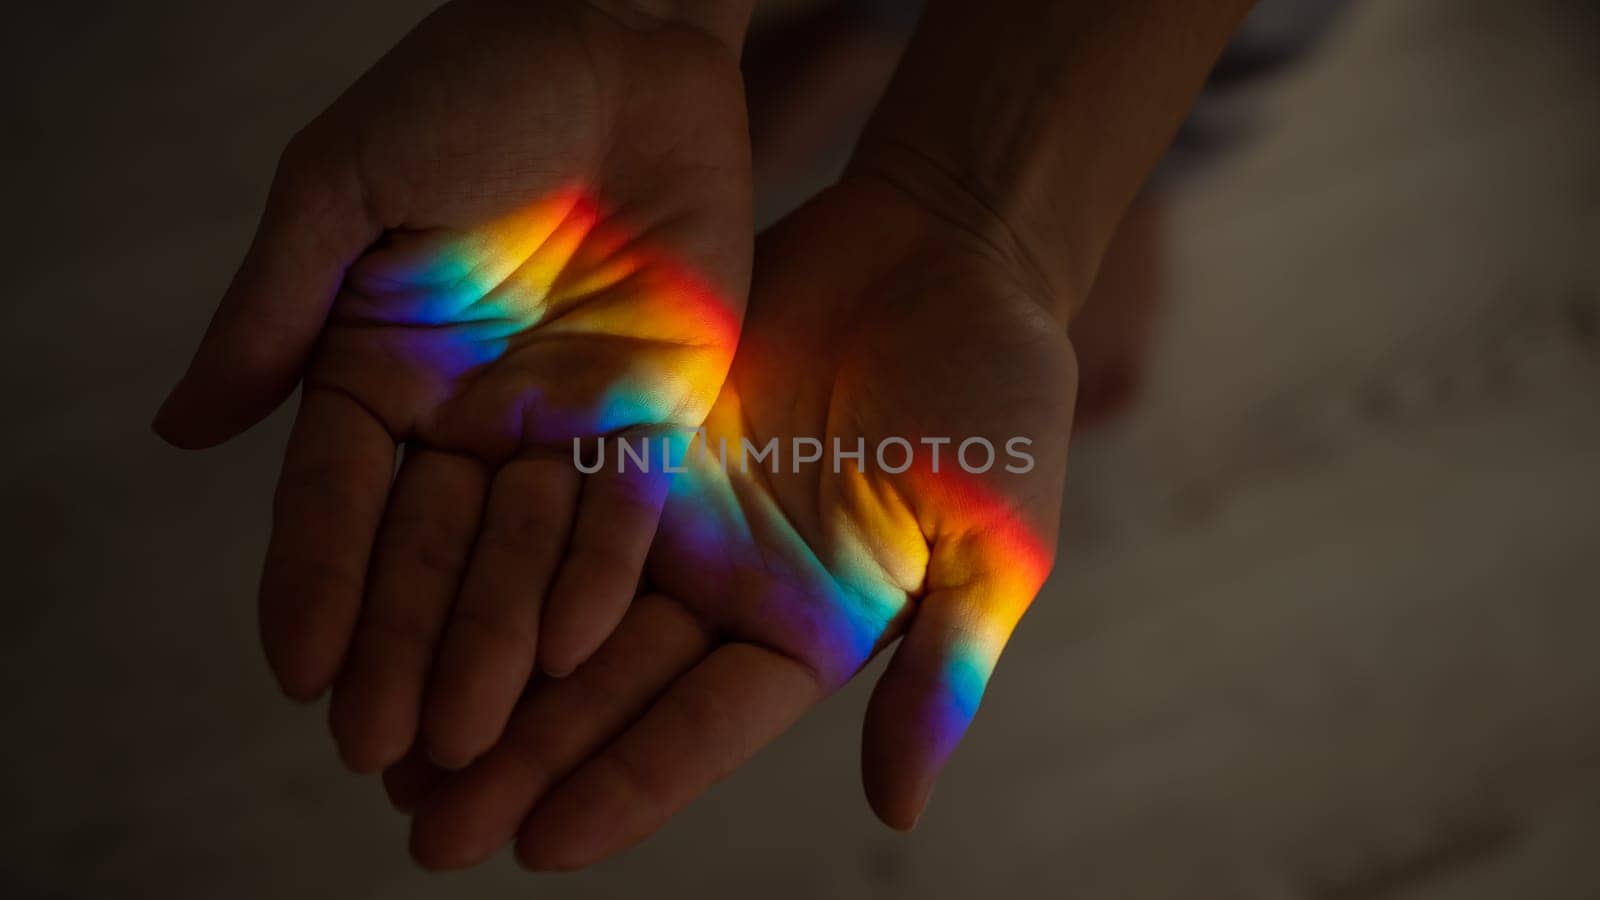 Rainbow ray on a woman's hand